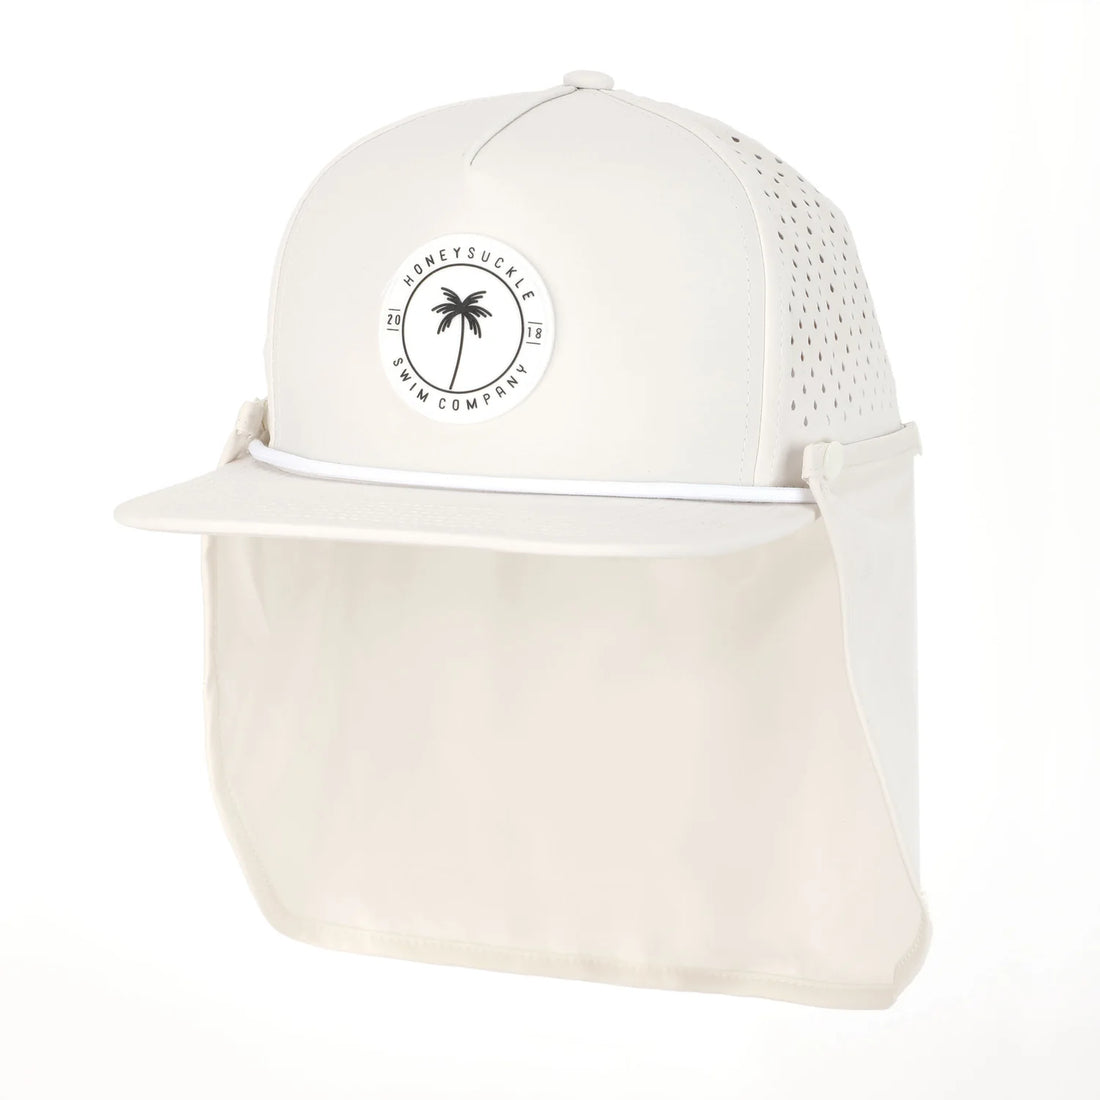 Honeysuckle Swim Co - Snapback Hat (Cream)